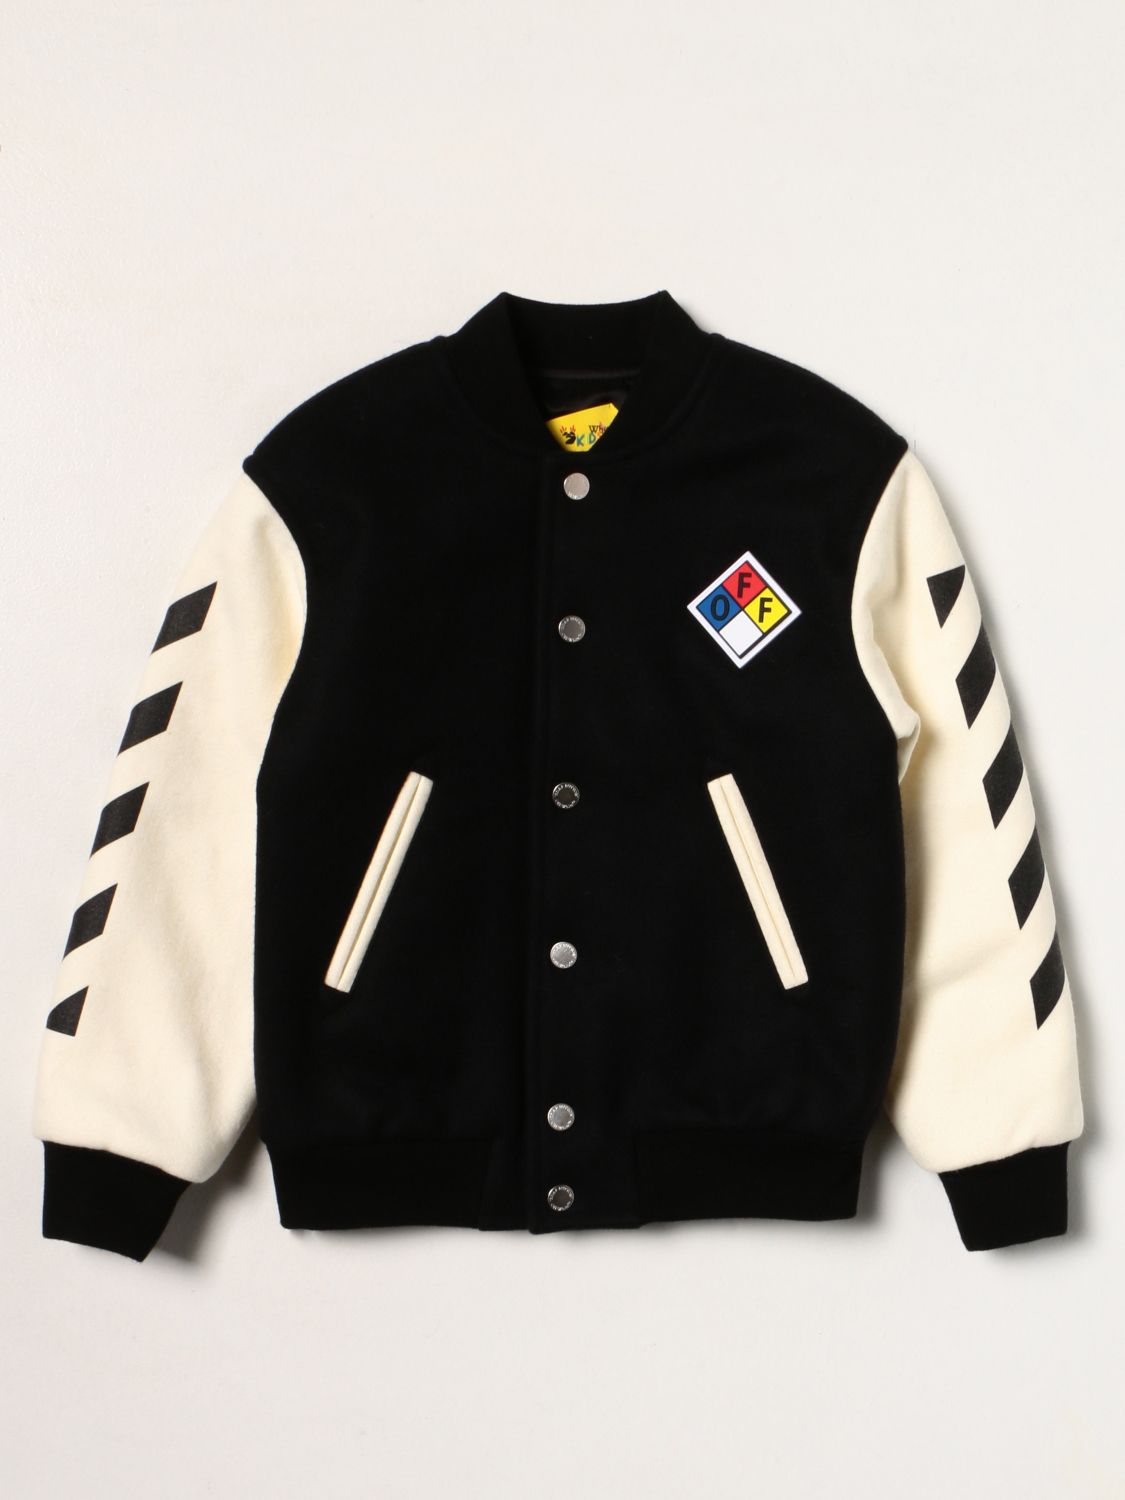 Adiccion Vendedor Préstamo de dinero OFF-WHITE: jacket for boys - Black | Off-White jacket OBEH001F21FAB002  online on GIGLIO.COM